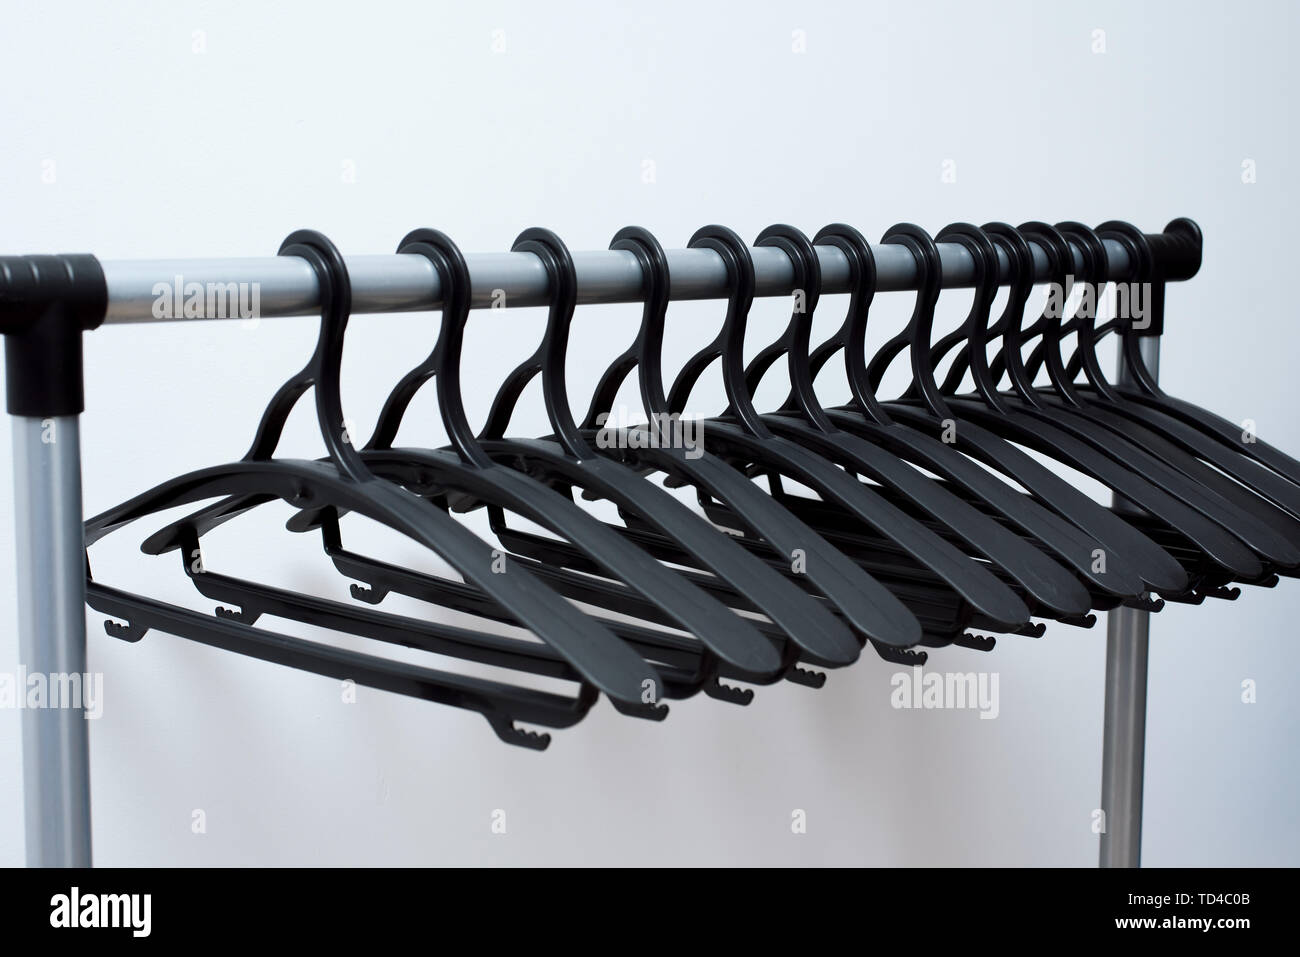 black plastic hangers hang on a light background. many different hangers. floor coat rack. Stock Photo